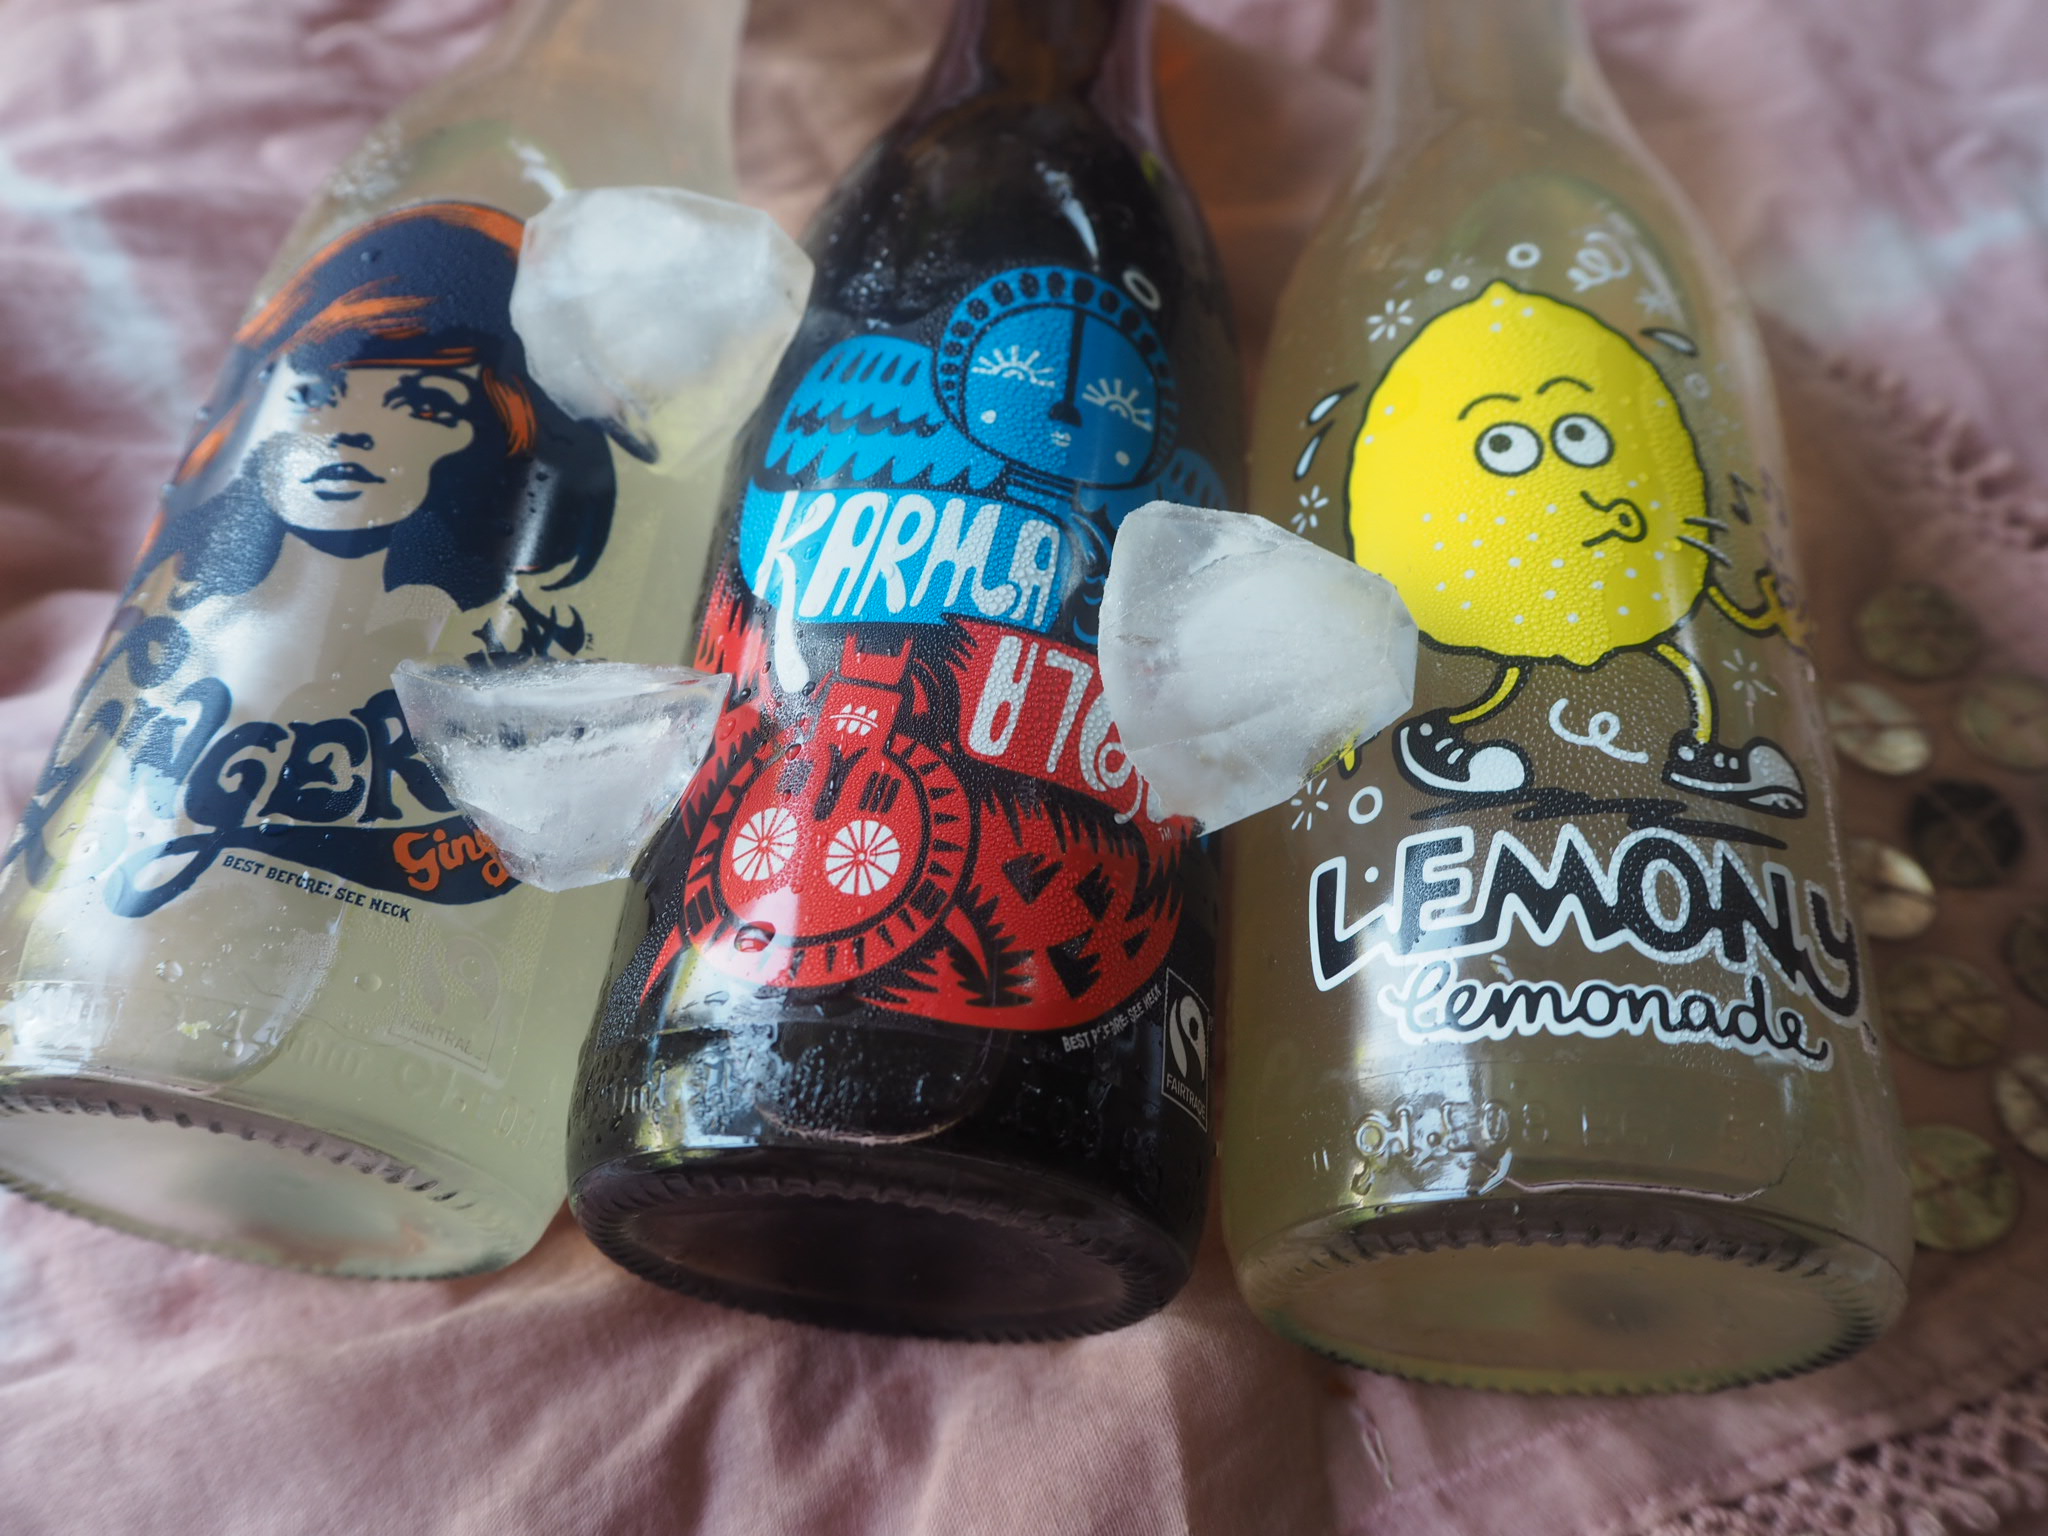 Karma Cola range of drinks